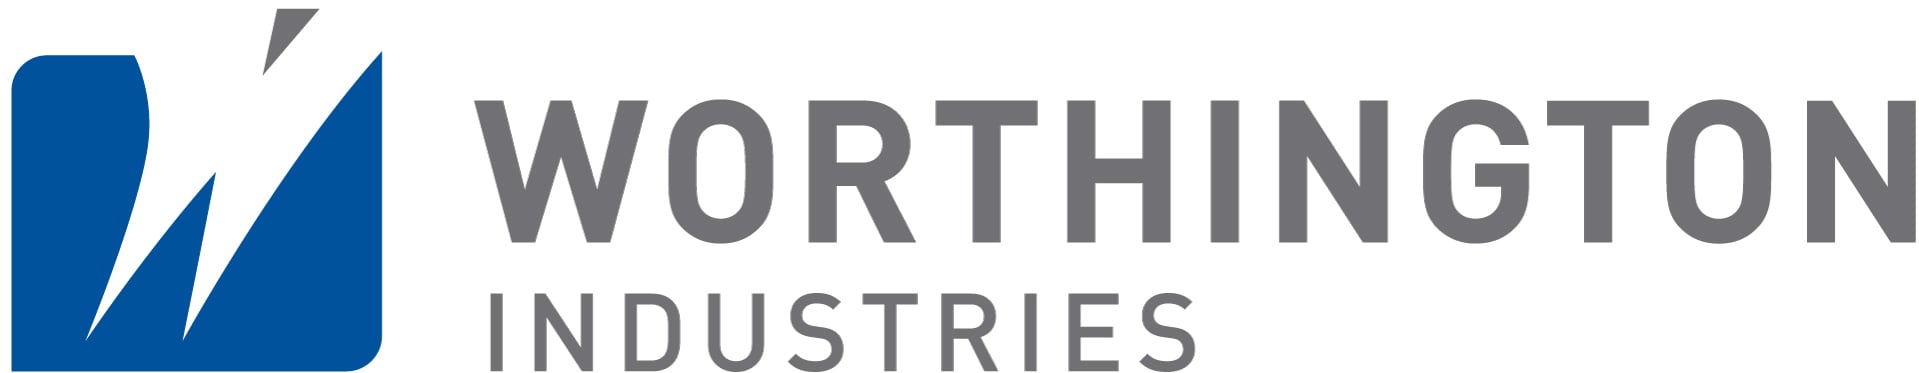 Worthington Industries Logo